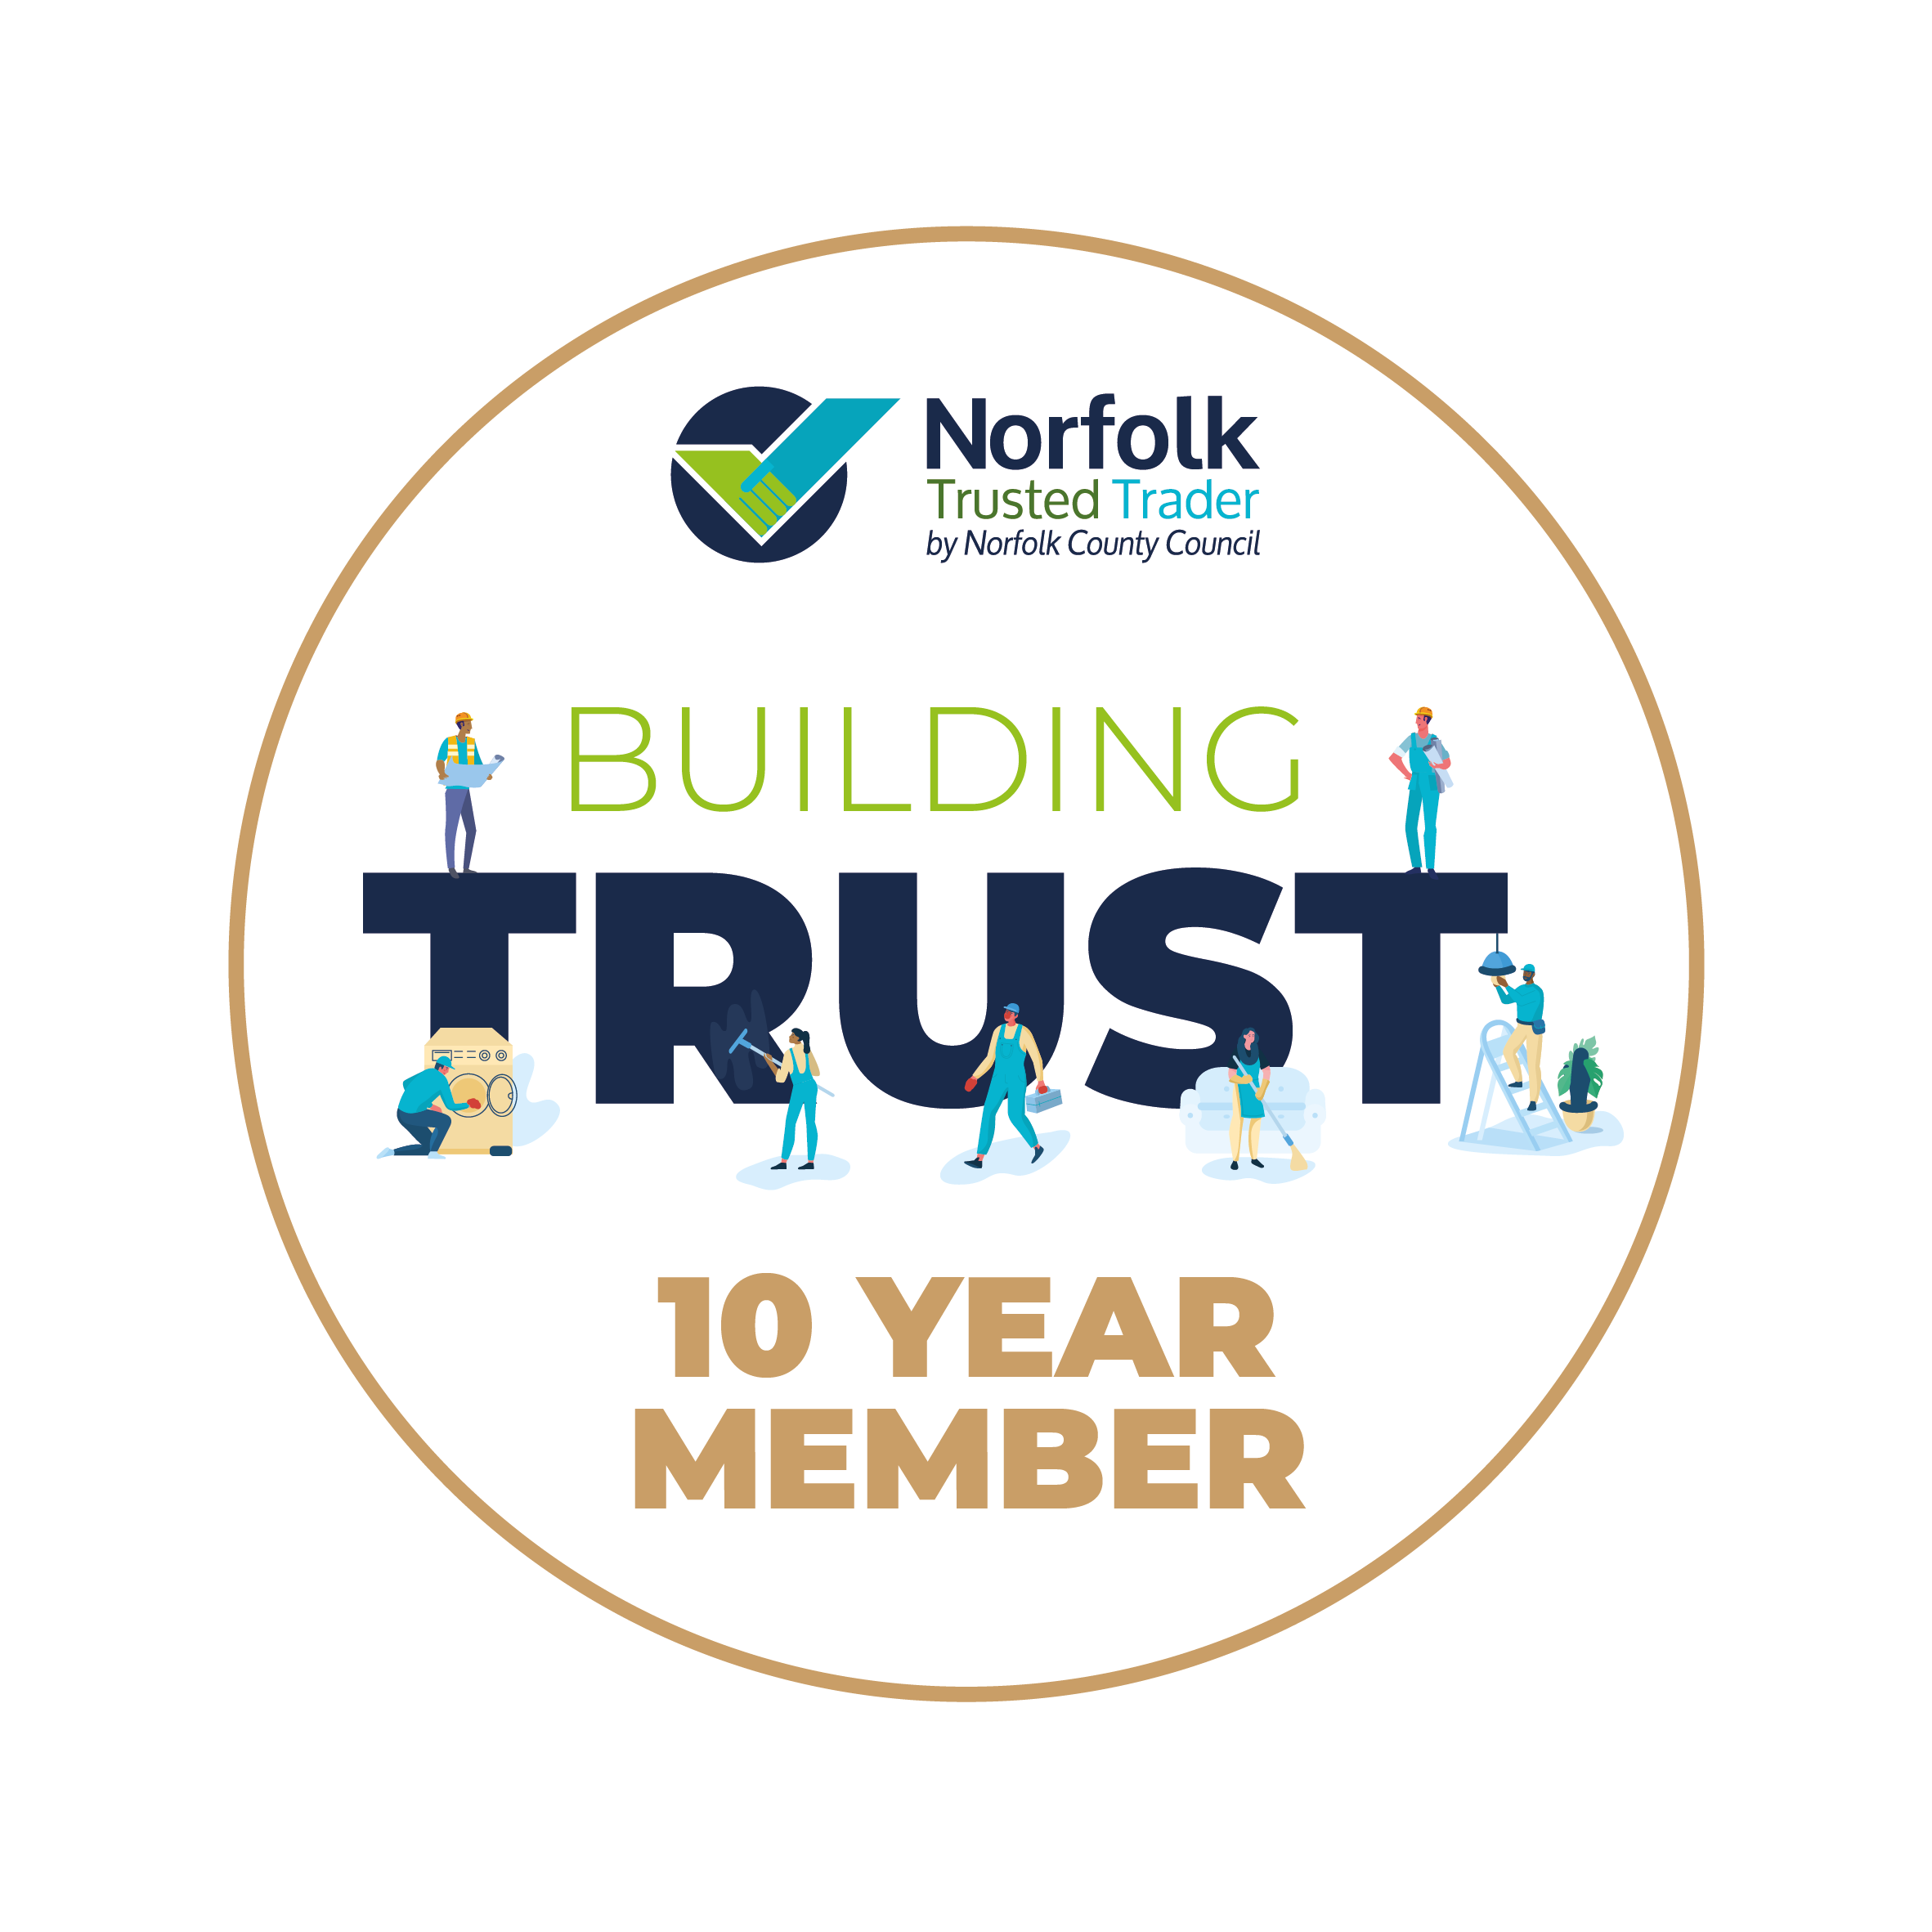 Norfolk trusted Trader Member